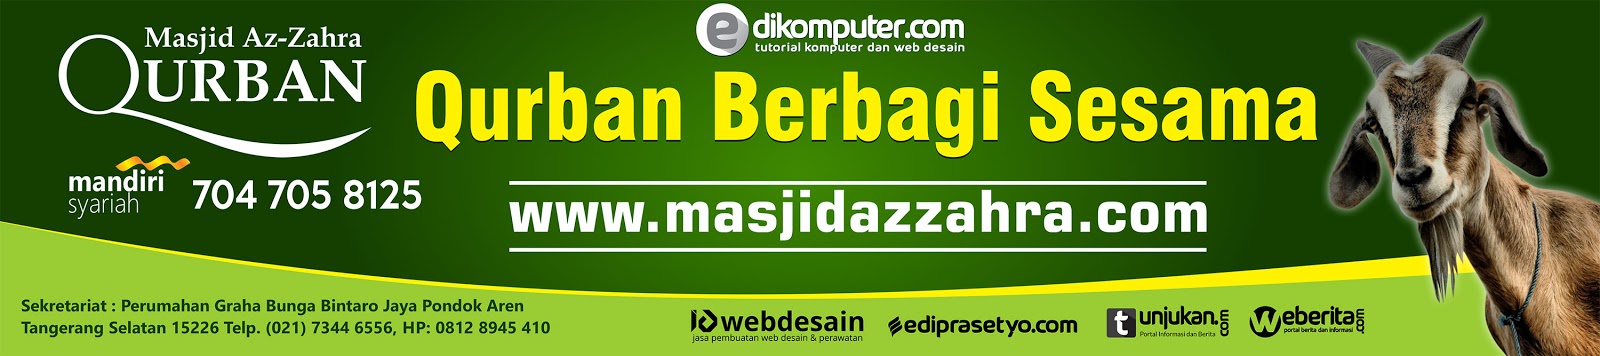 Download Banner  Qurban  Format Coreldraw Berbagi adsense 